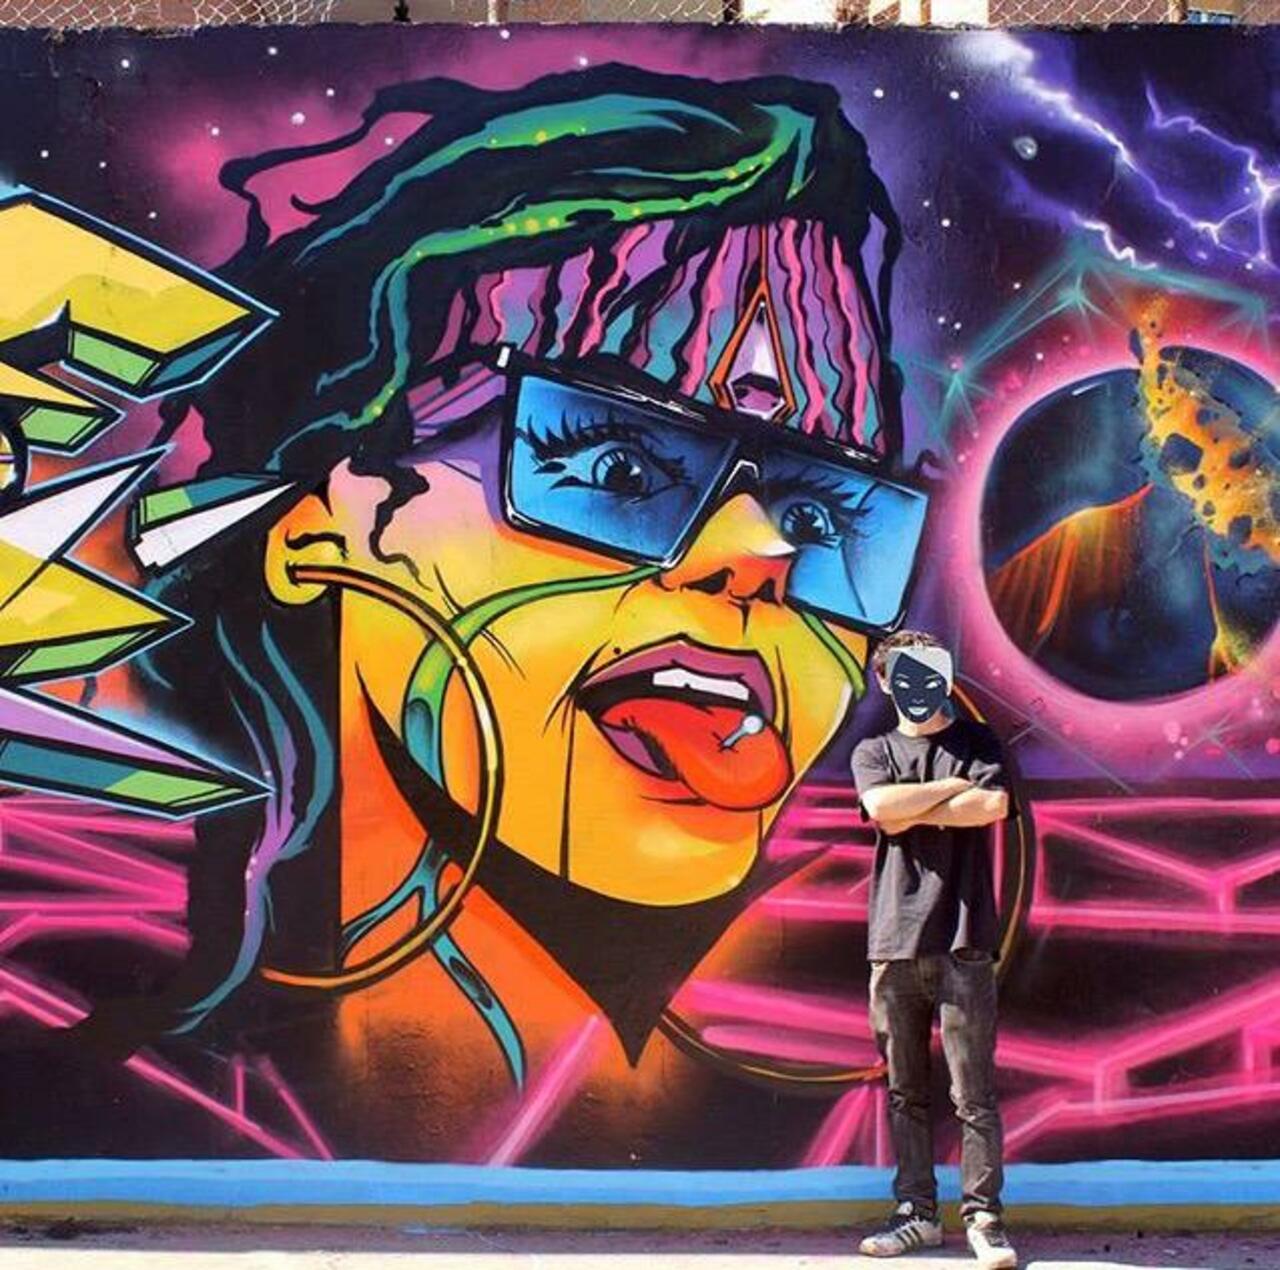 Brilliant new Street Art by the artist Jaycaes

#art #graffiti #mural #streetart http://t.co/NHYkRpAaWH